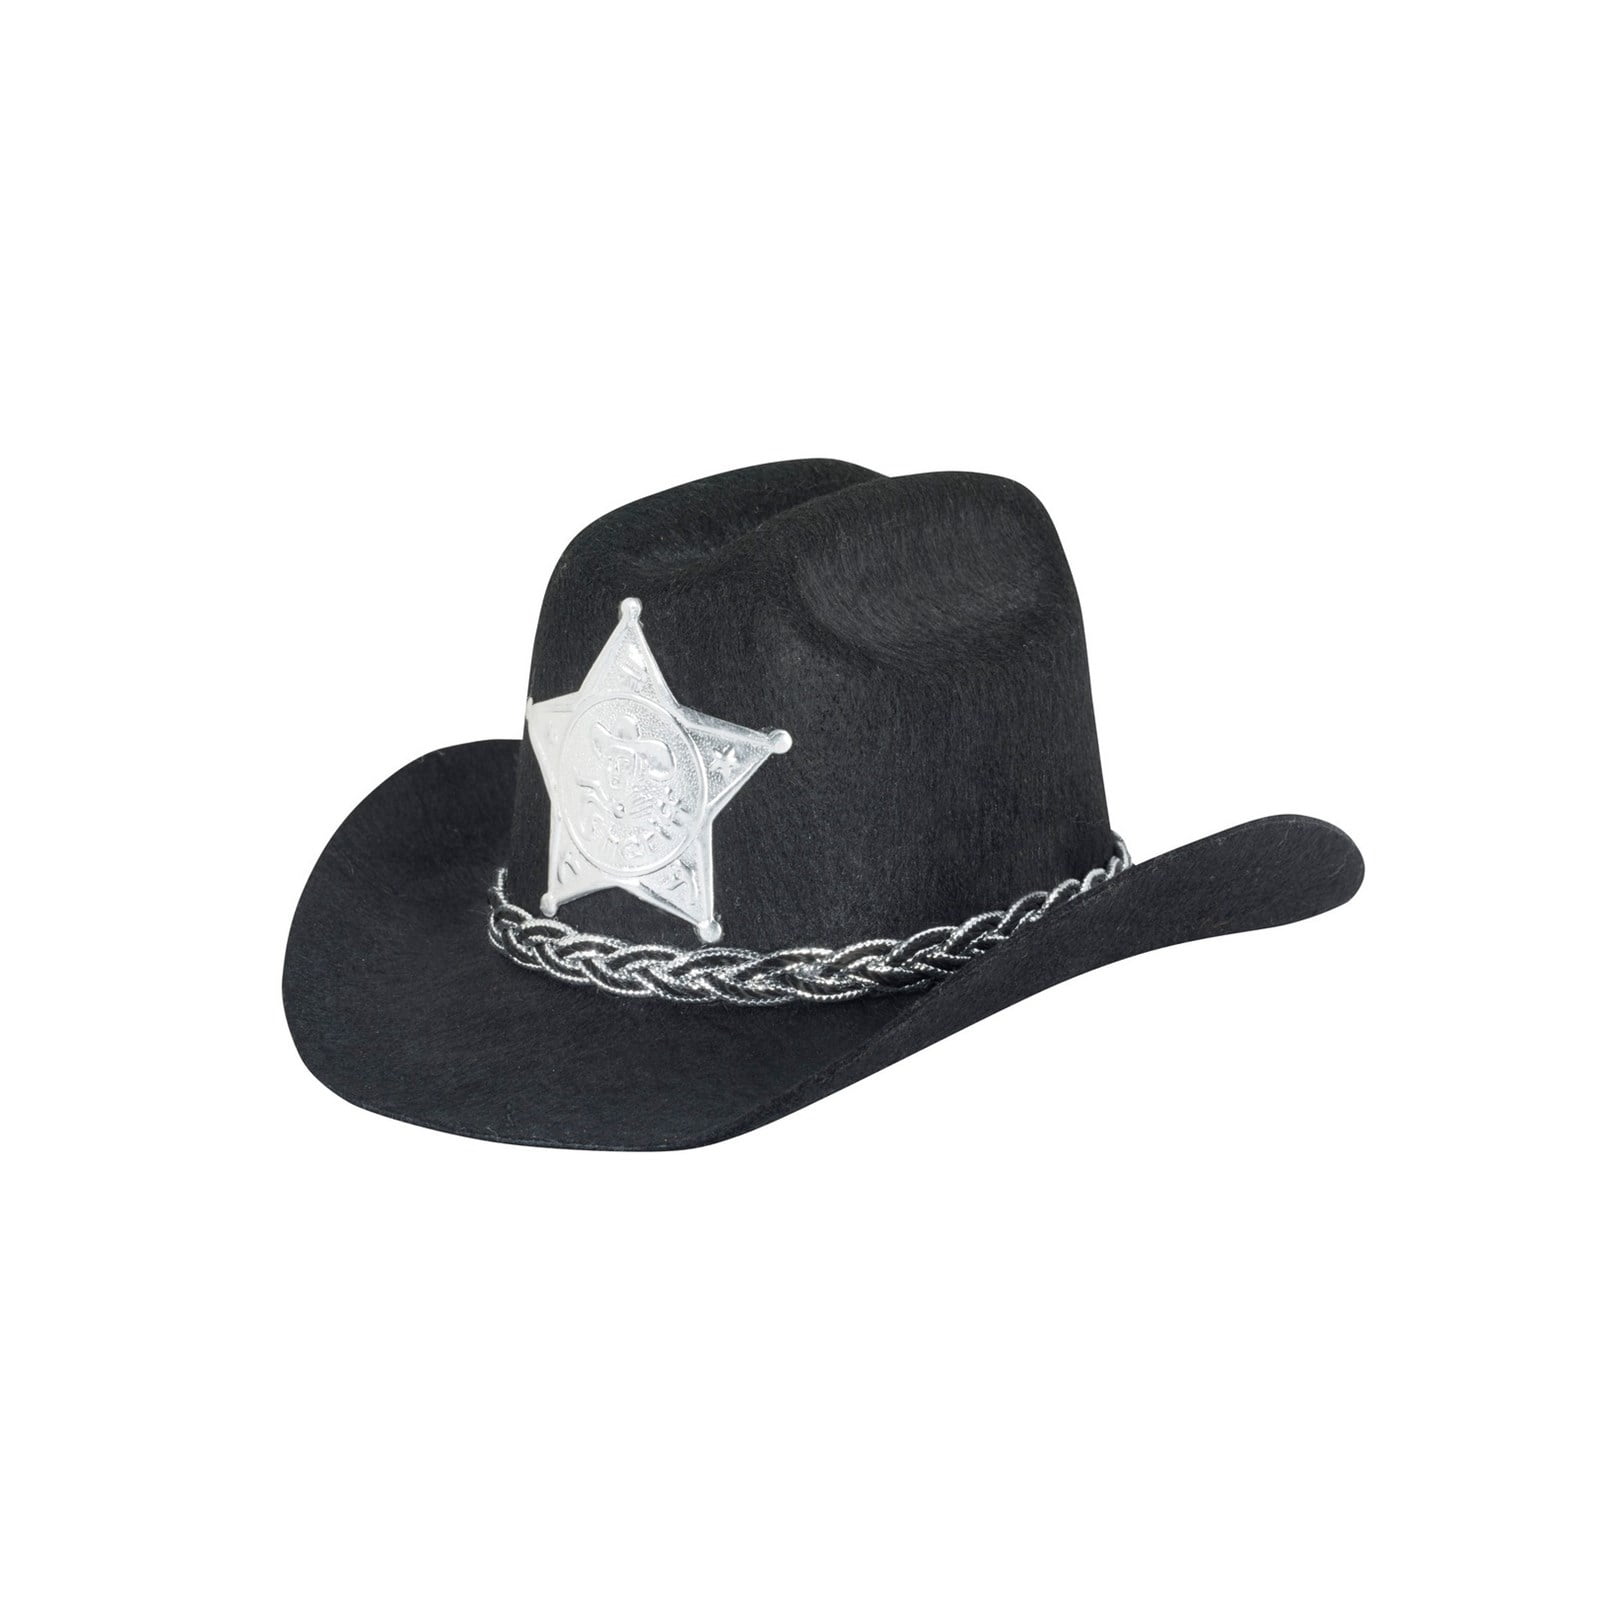 Suede Look Cowboy Hat Adult Unisex Smiffys Fancy Dress Costume Hat 